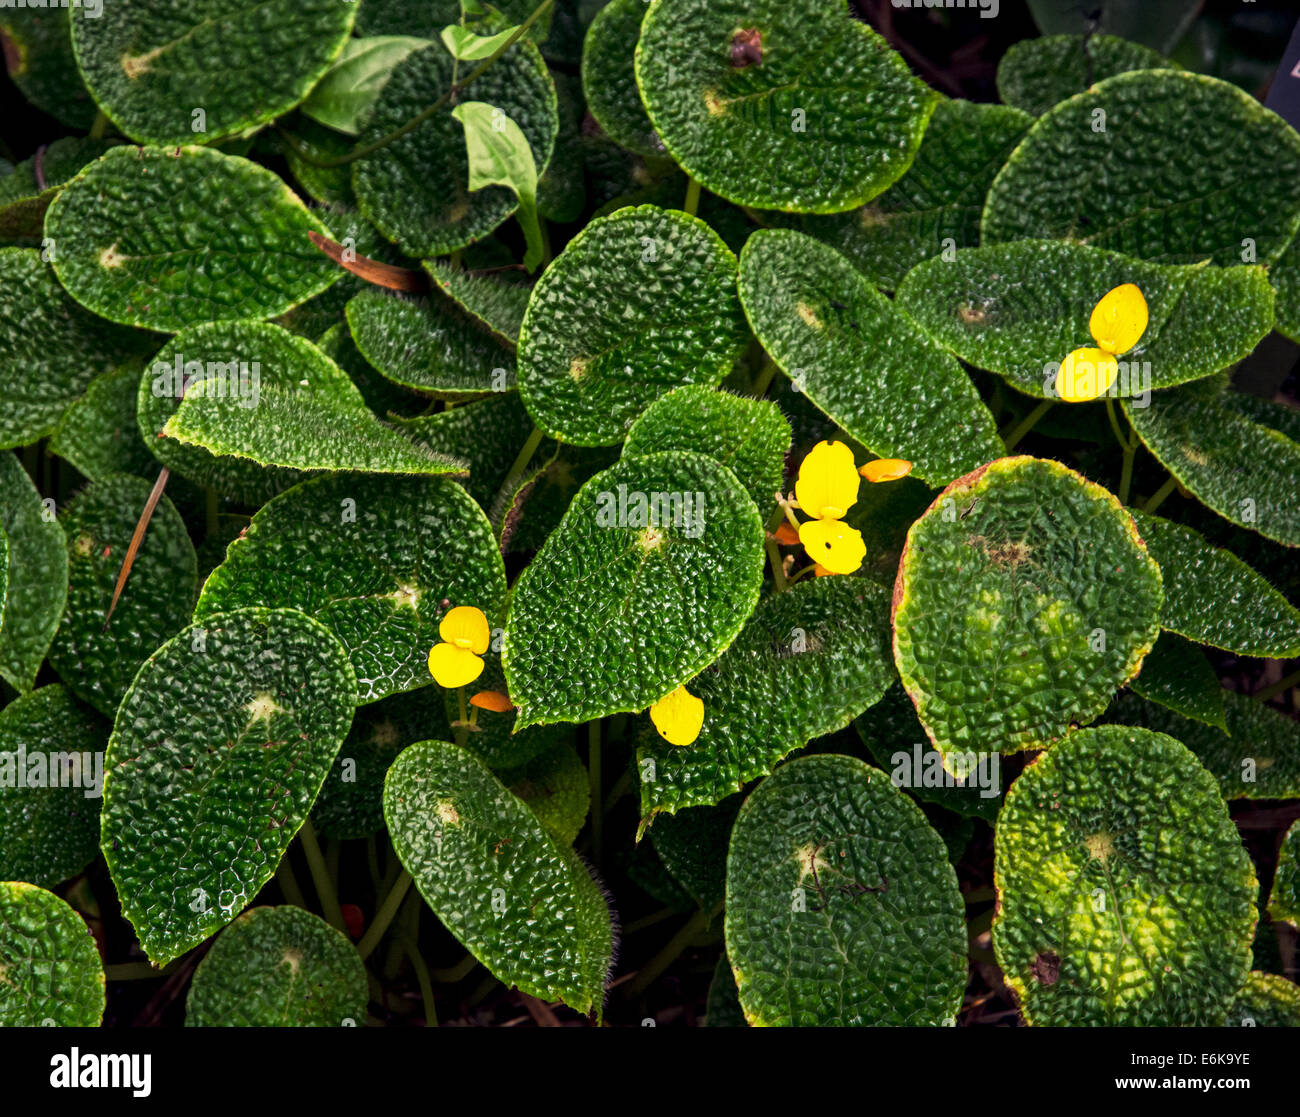 Begonia microsperma (ficicola) is yellow-flowered african species. Stock Photo